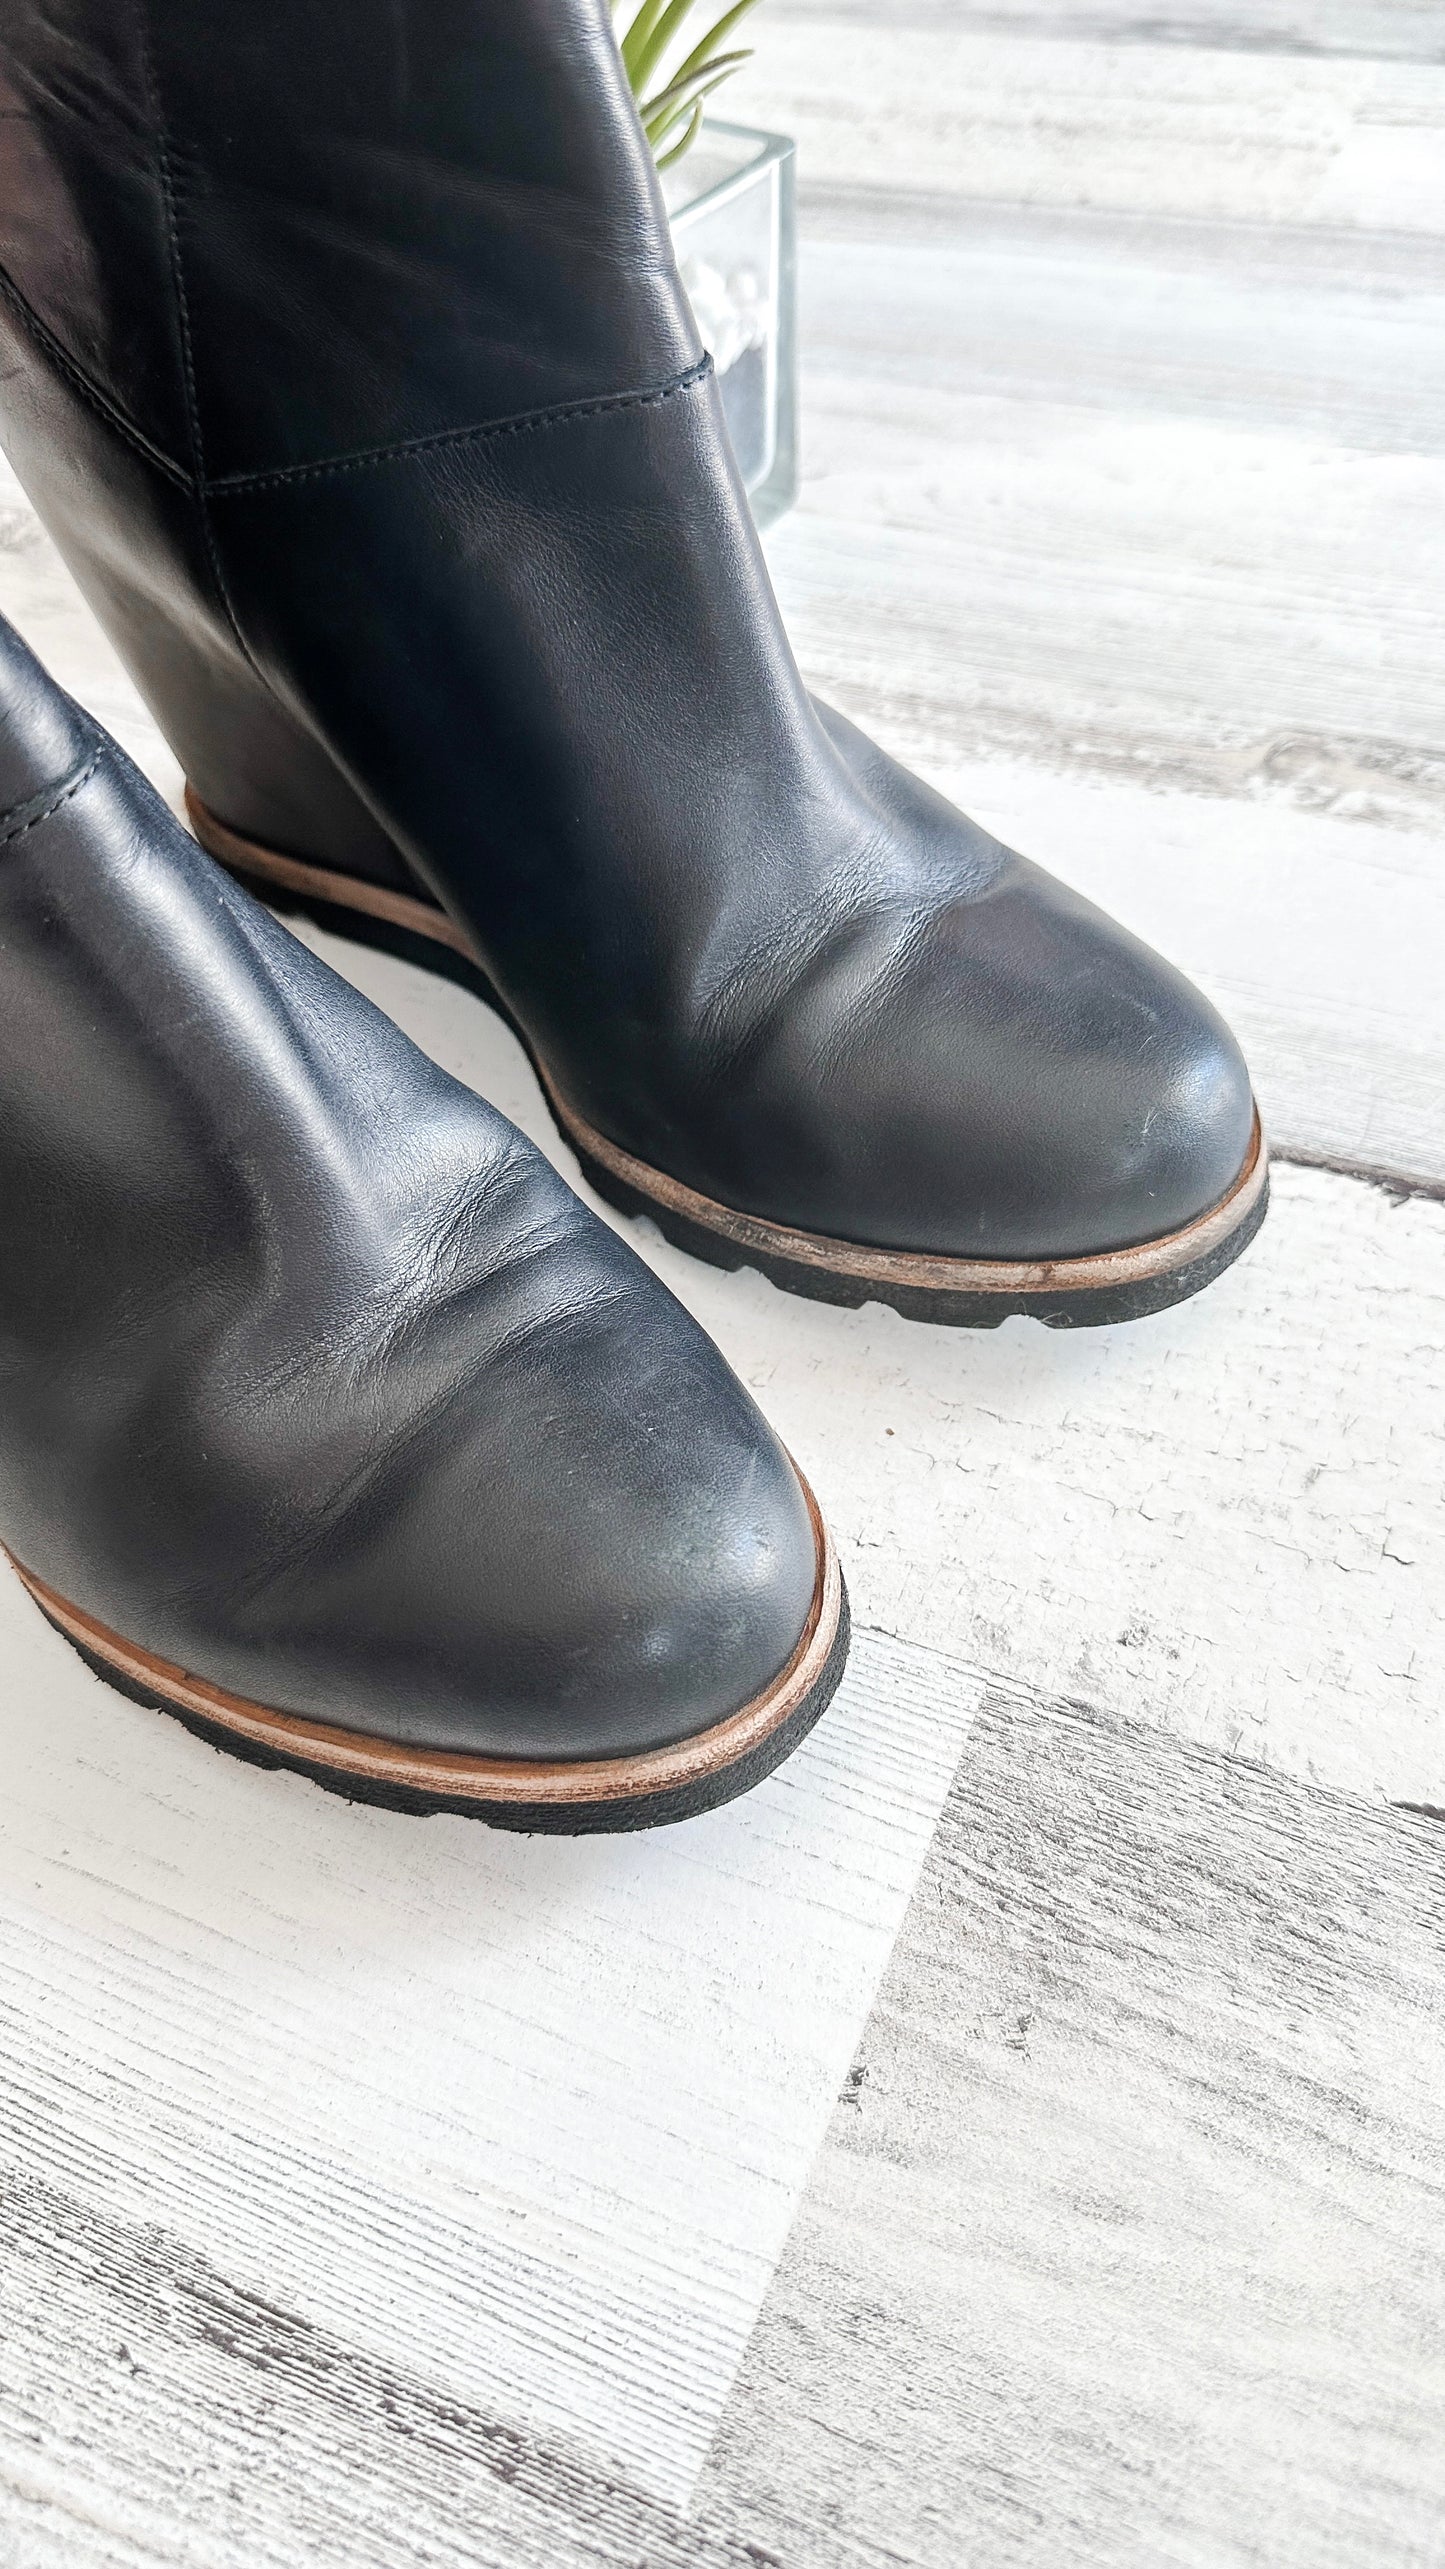 UGG Black Leather Amal Wedge Boots (7.5)